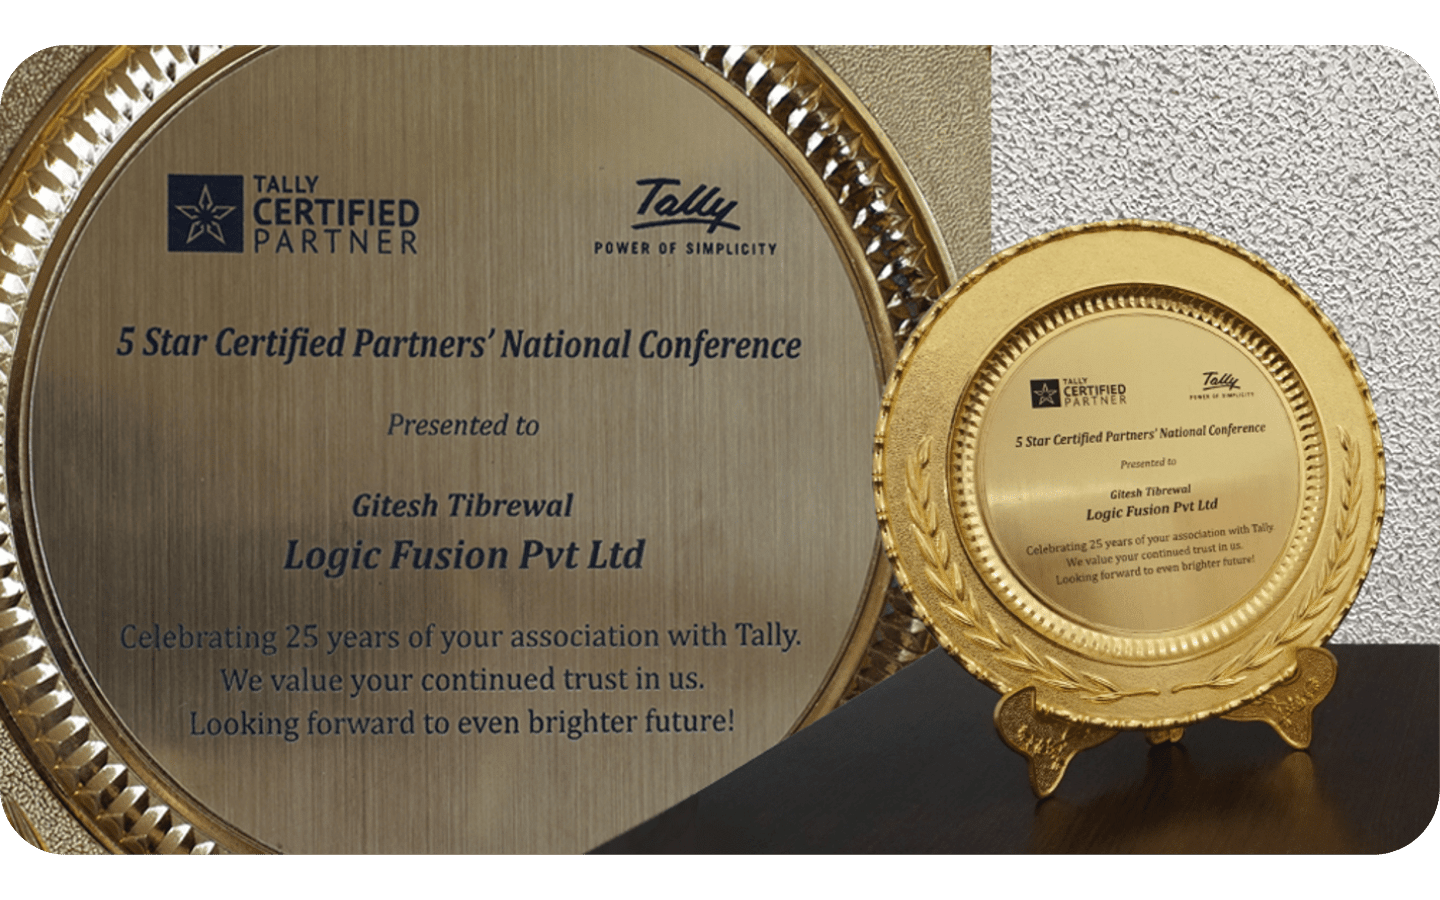 Tally Award - Logic Fusion